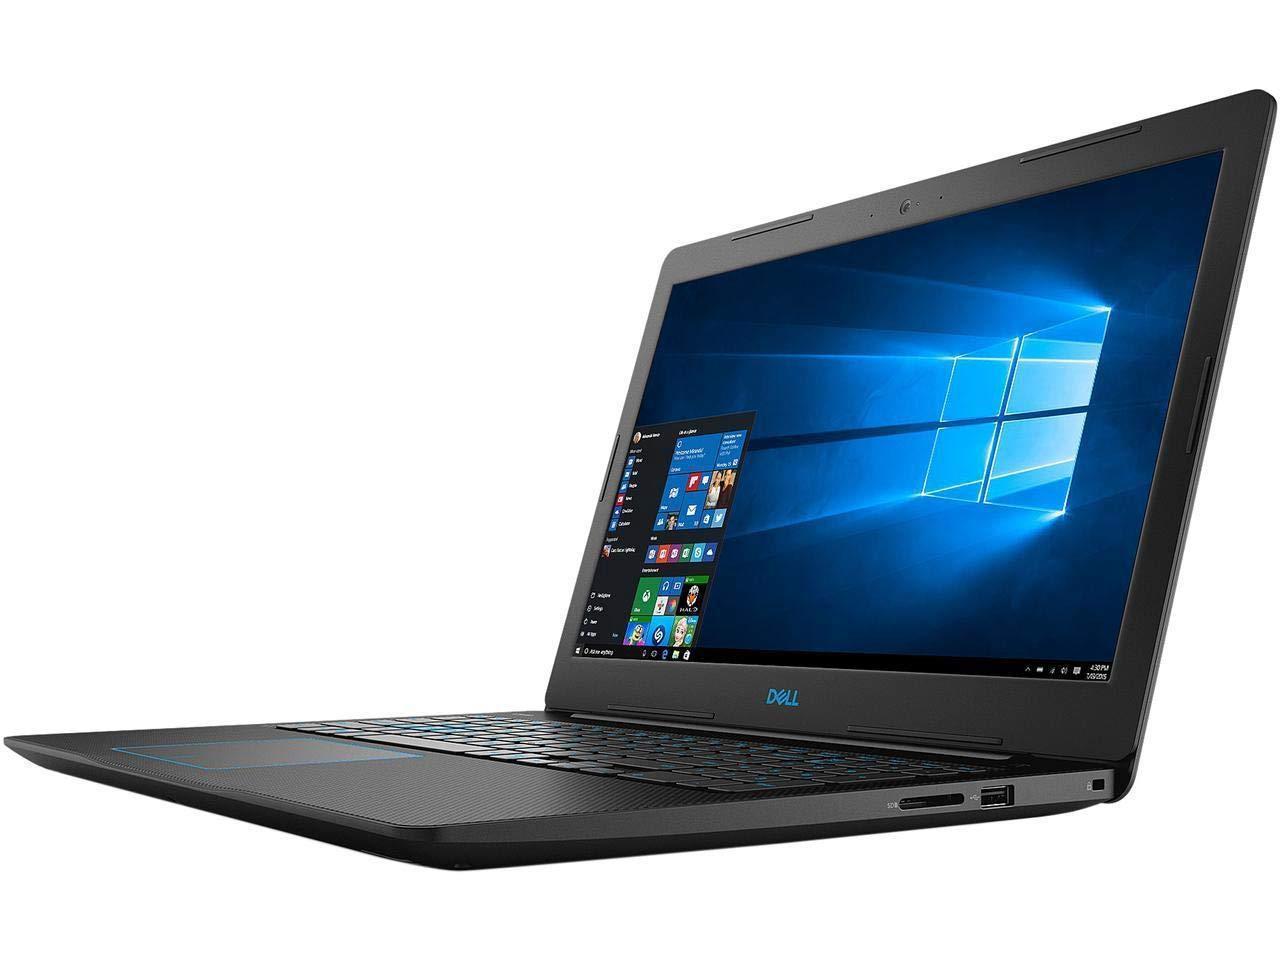 Newest Dell 15.6" FHD IPS High-Performance Gaming Laptop | Intel Core i5-8300H Quad-Core|12GB DDR4 RAM |512GB M.2 SSD+1TB HDD |NVIDIA GeForce GTX 1050Ti 4GB |Backlit Keyboard | MaxxAudio|Windows 10